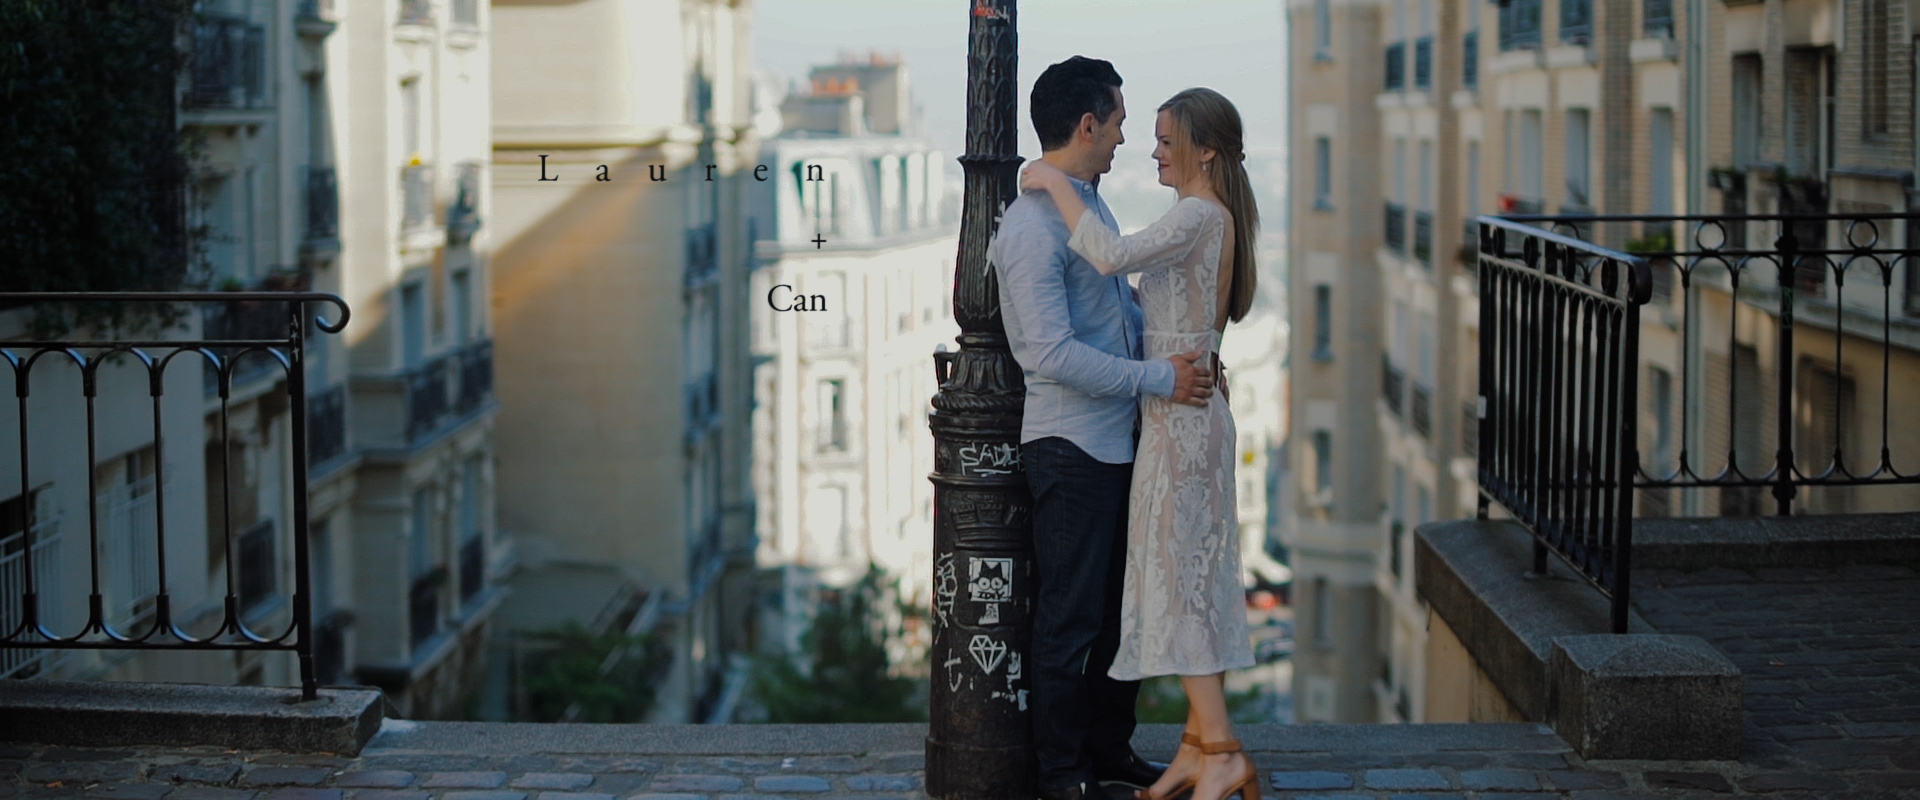 Lauren + Can // Ritz Hotel Paris // Wedding videographer Paris